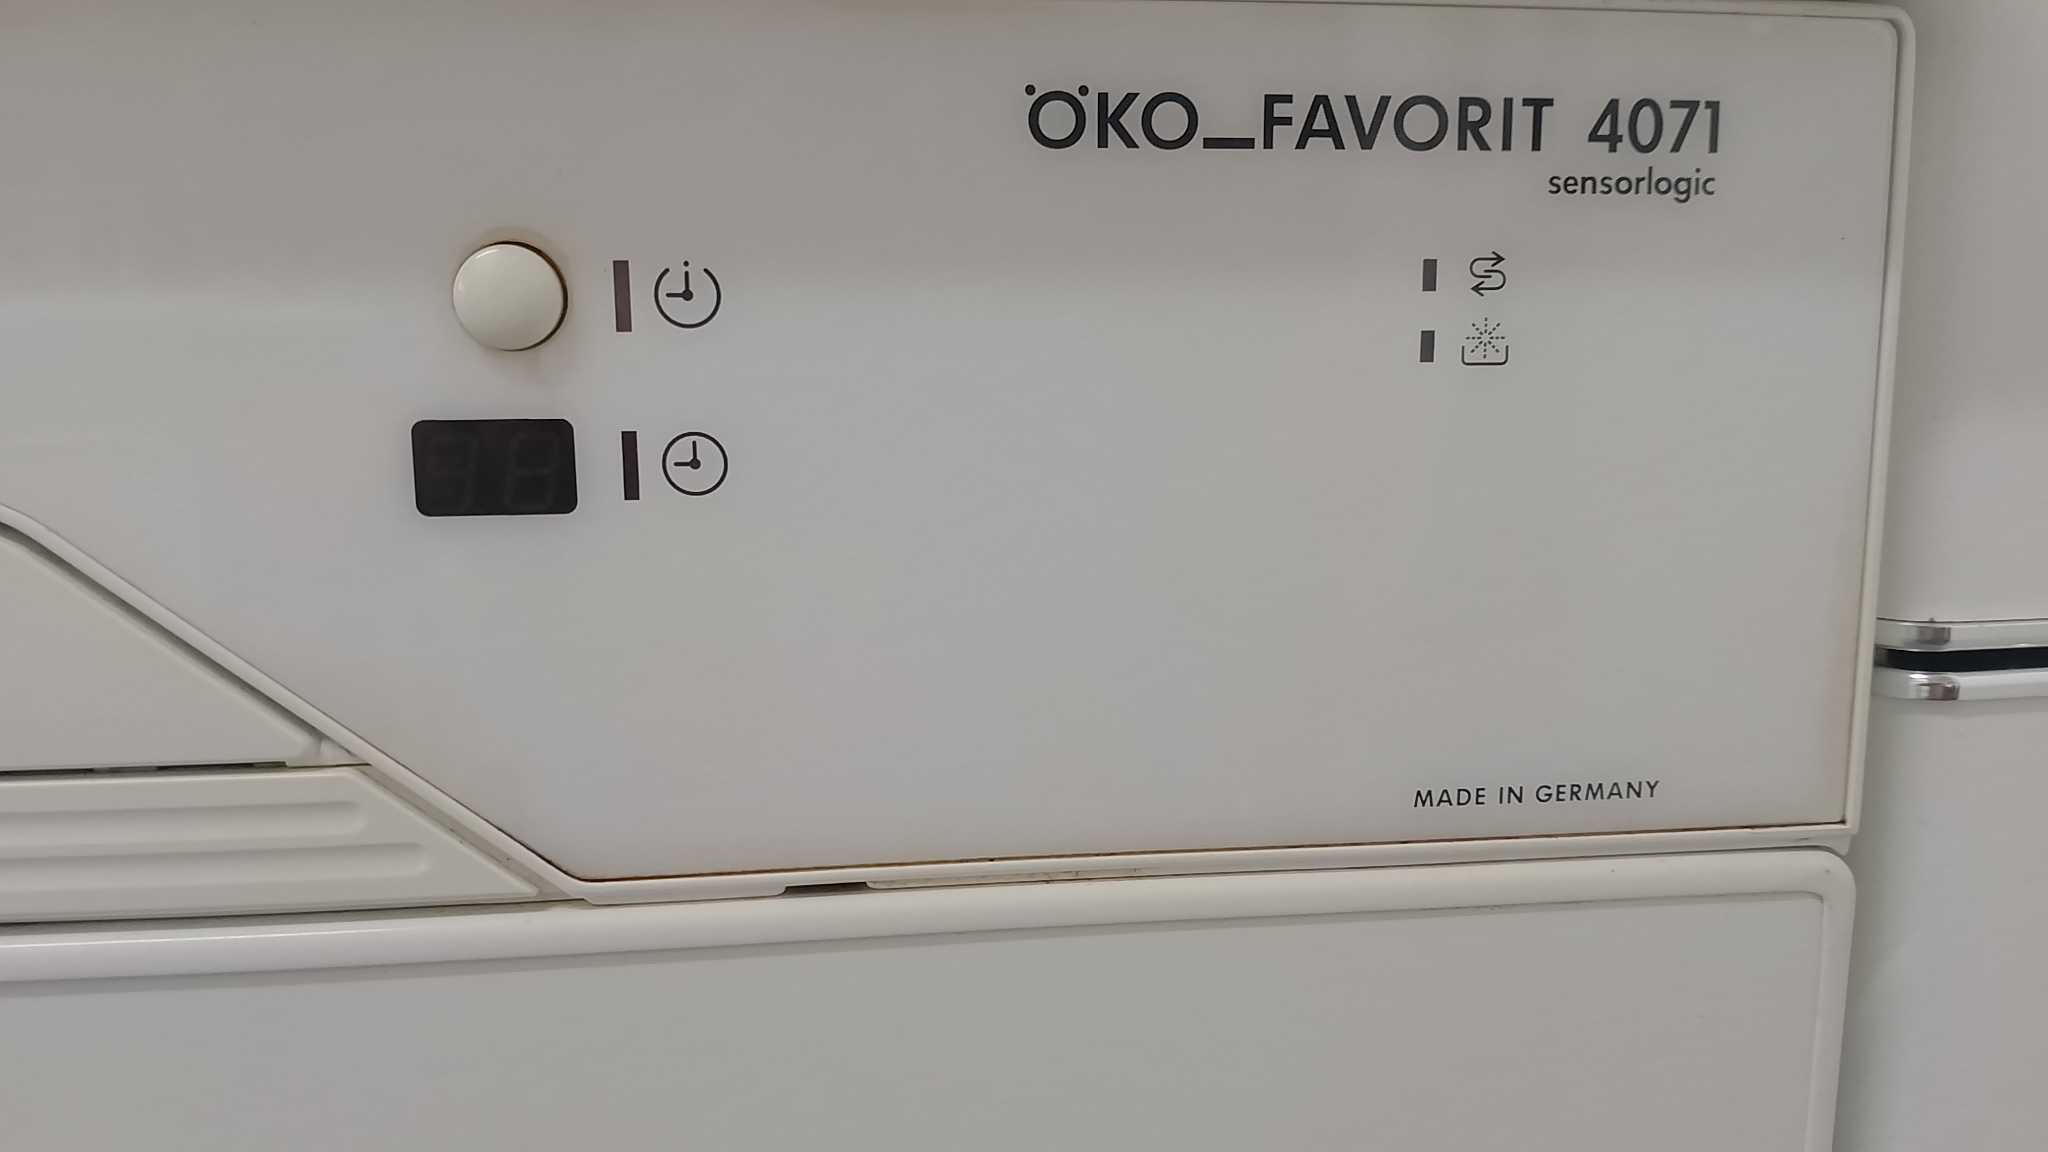 Máquina Automática Lavar Loiça AEG. OKO Favorit 4071